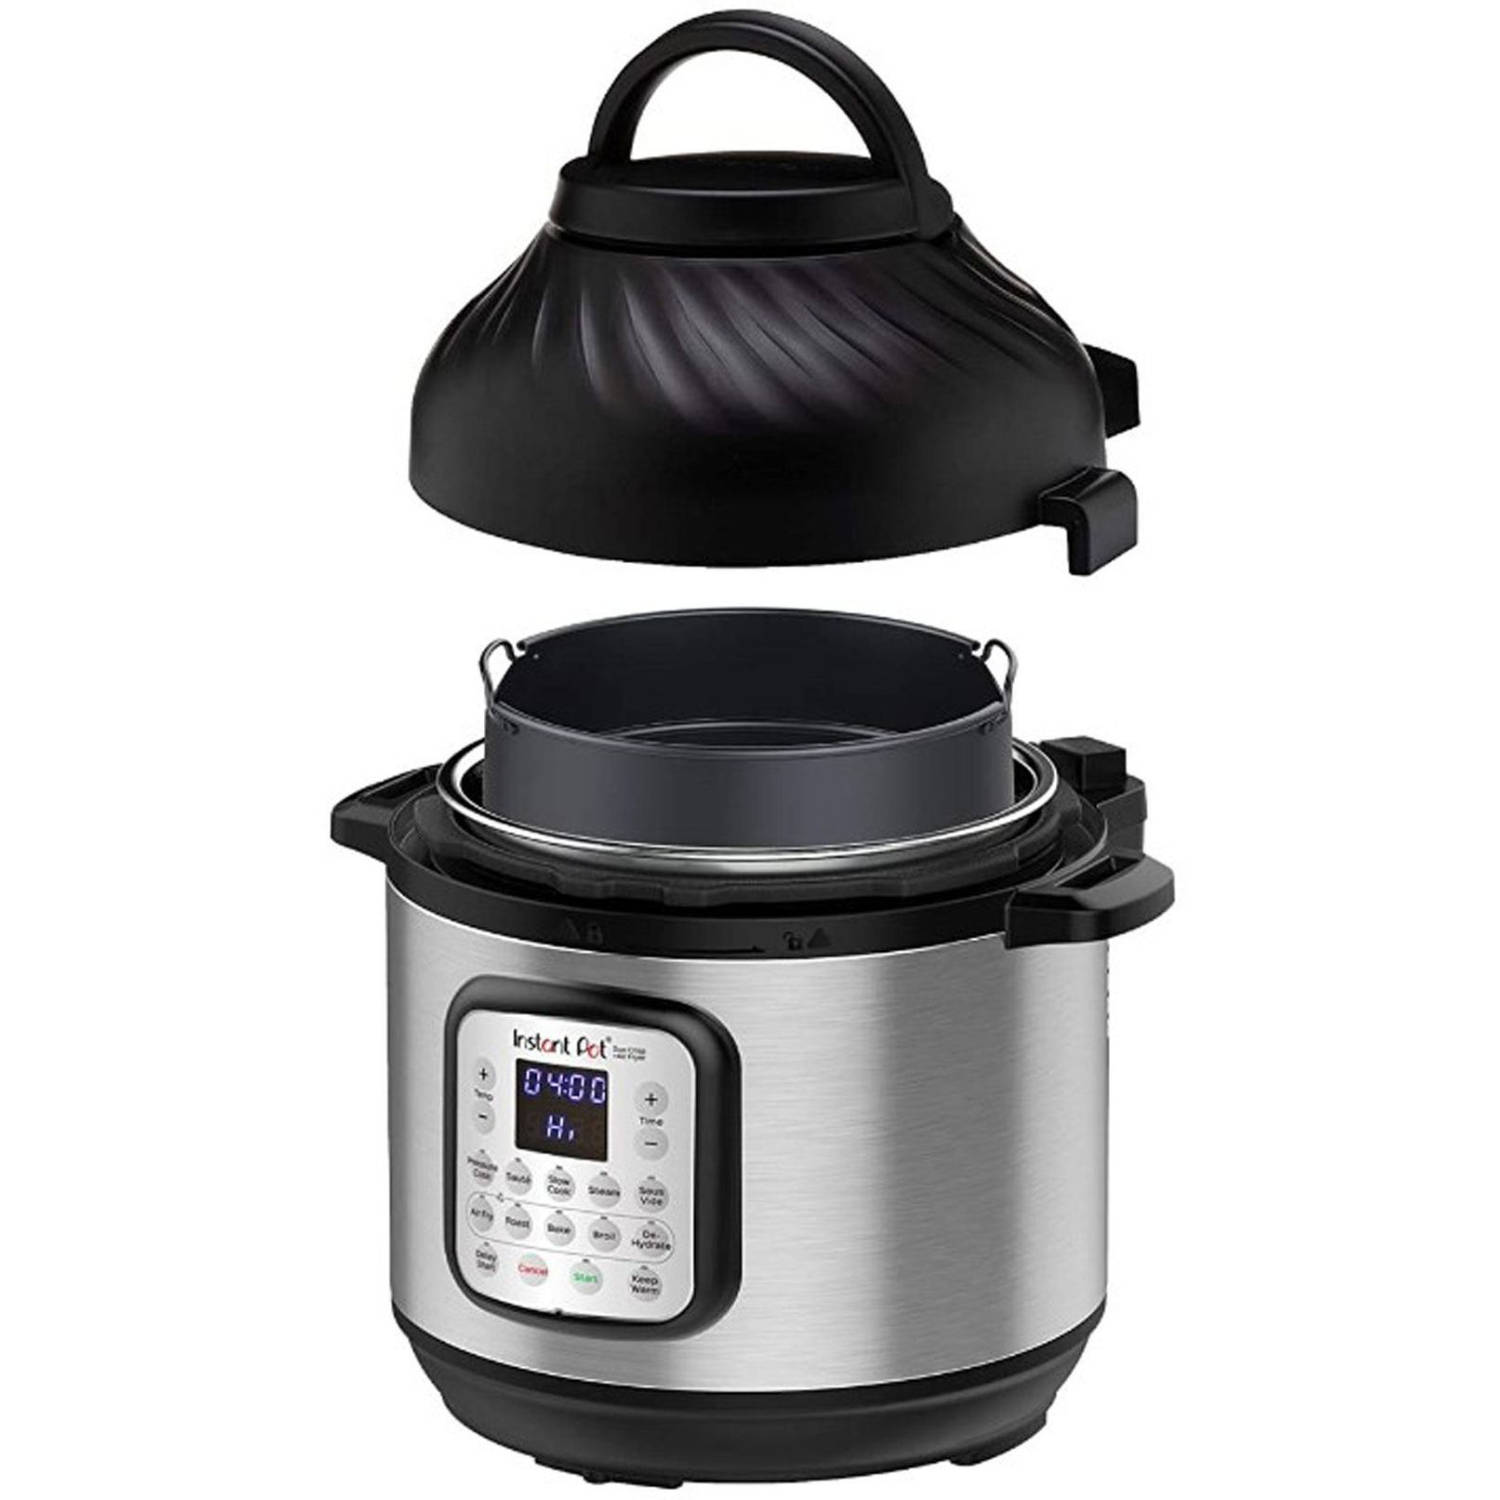 Instant Pot Multicooker / Slowcooker / Airfryer Duo Crisp - 7.6 Liter - 1500 W - 11-in-1